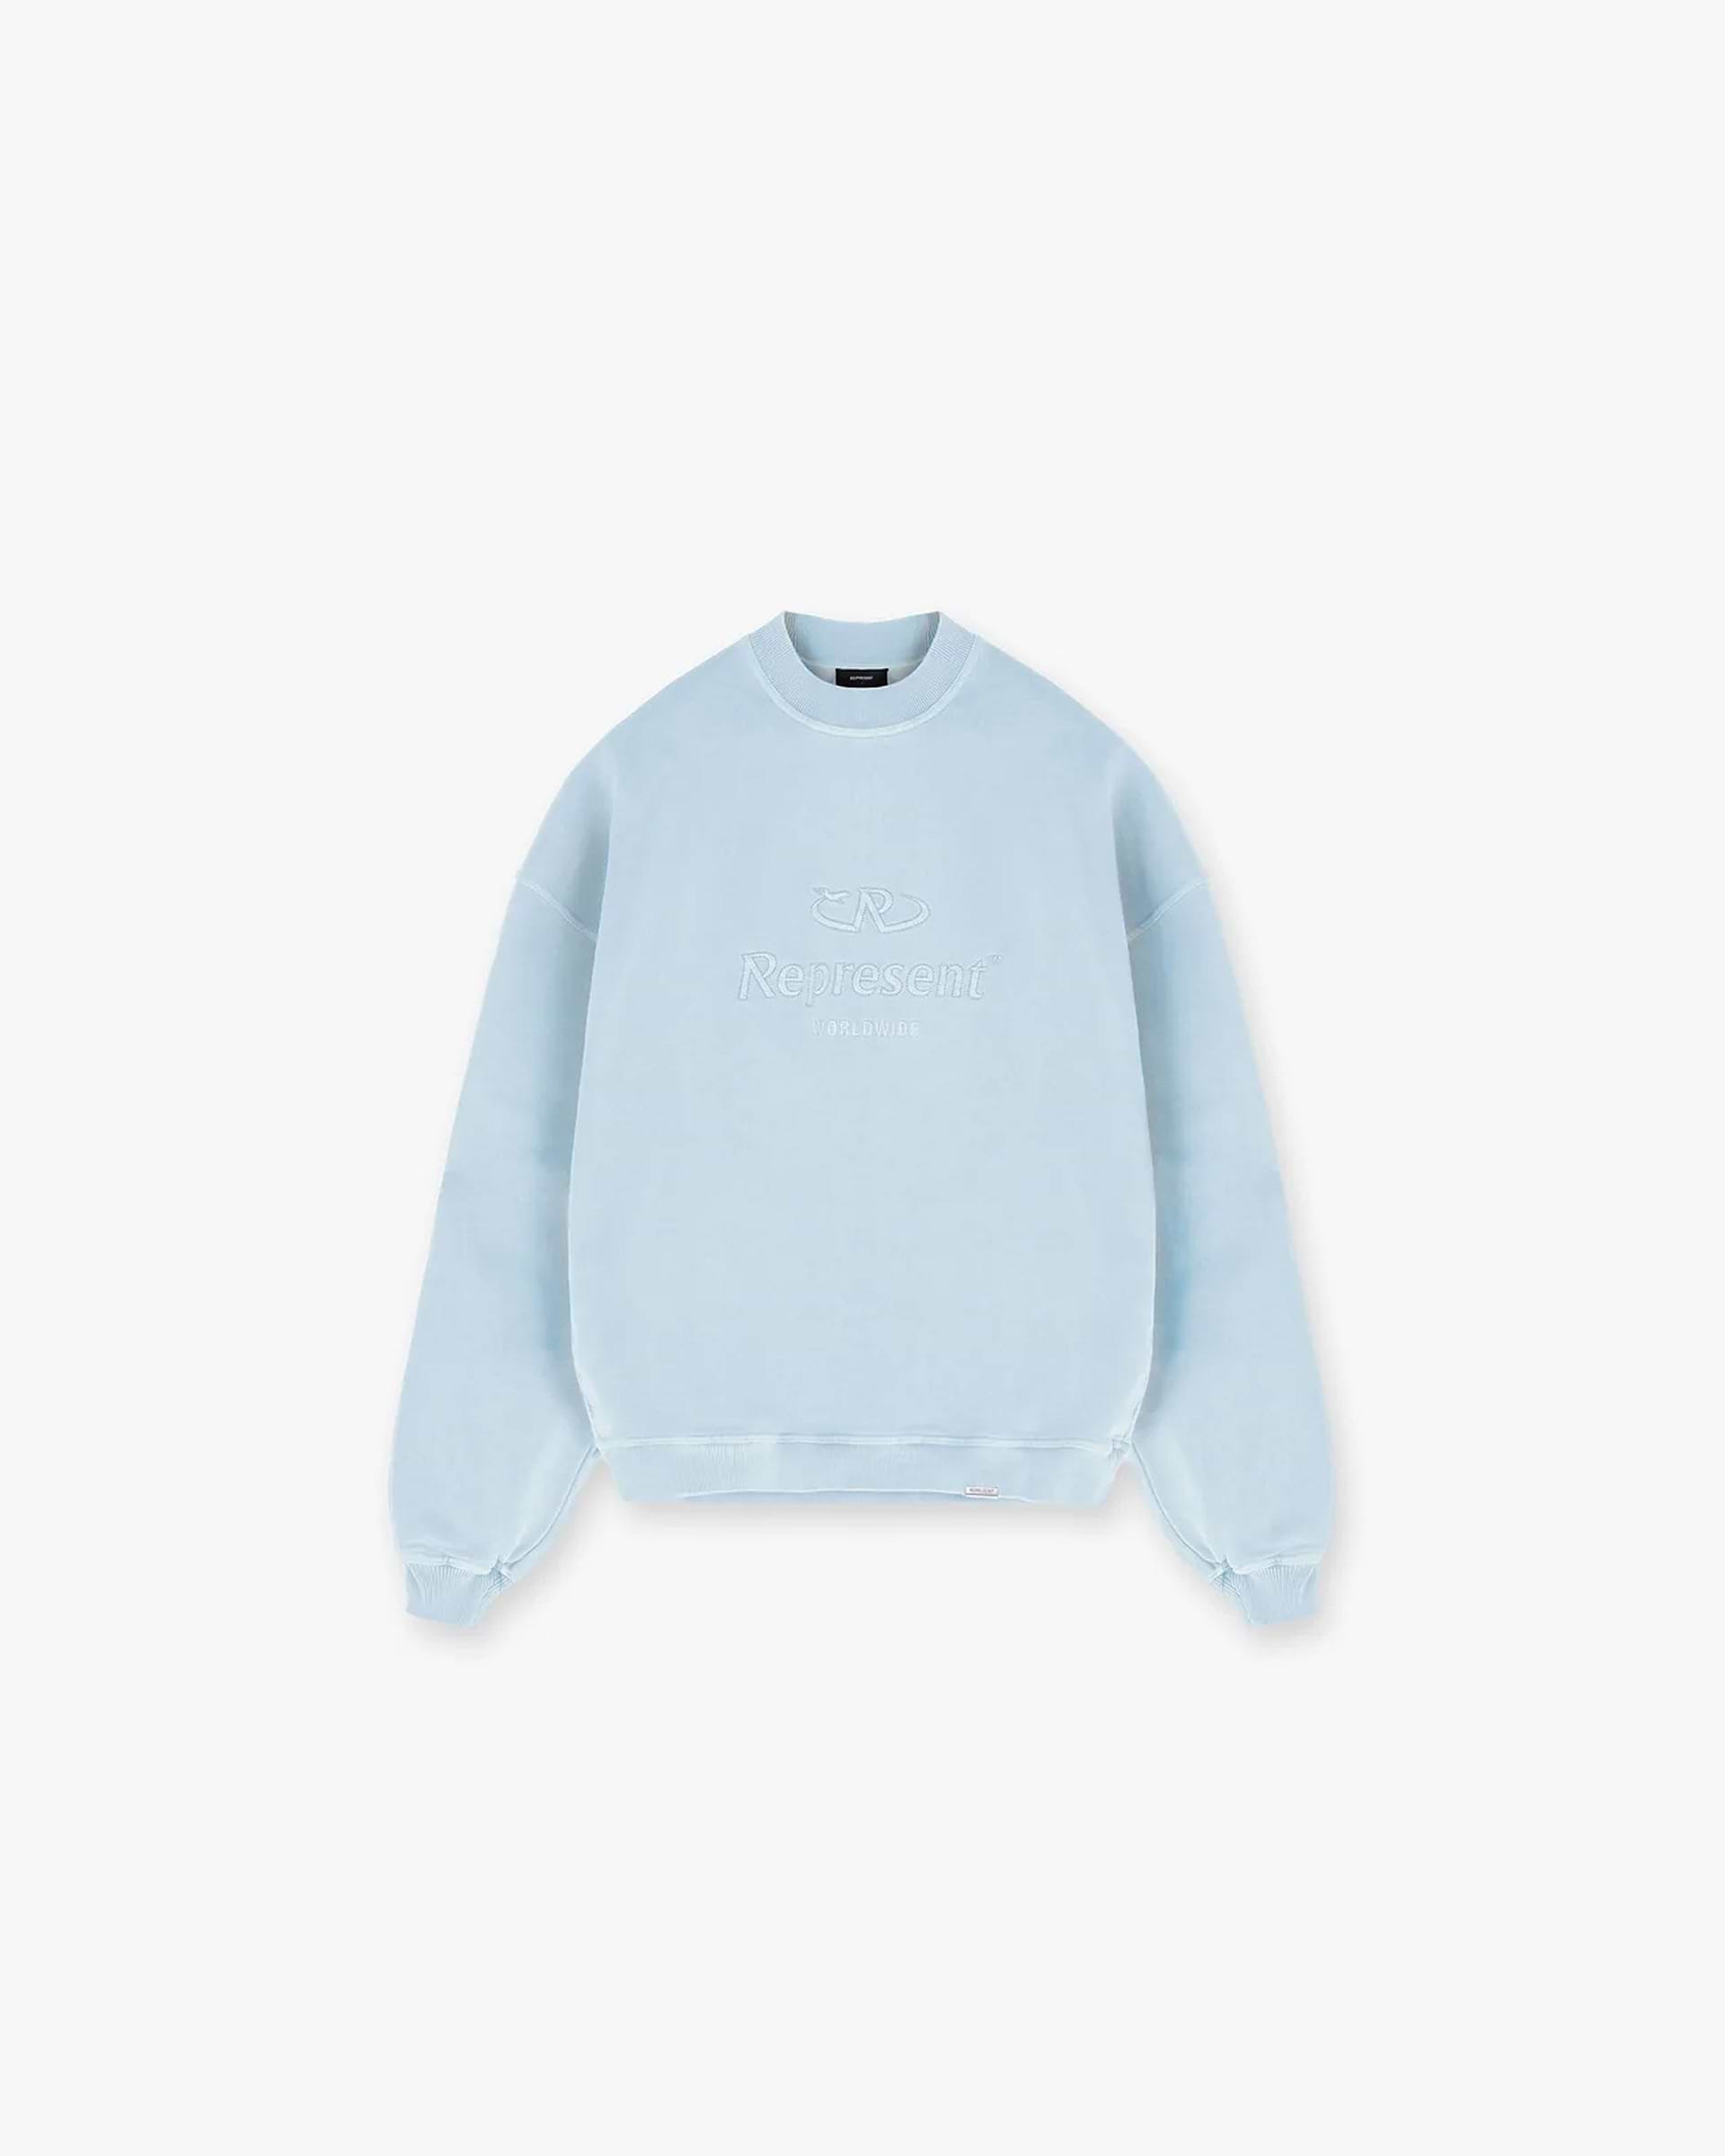 Worldwide Sweater | Powder Blue Sweaters SC23 | Represent Clo